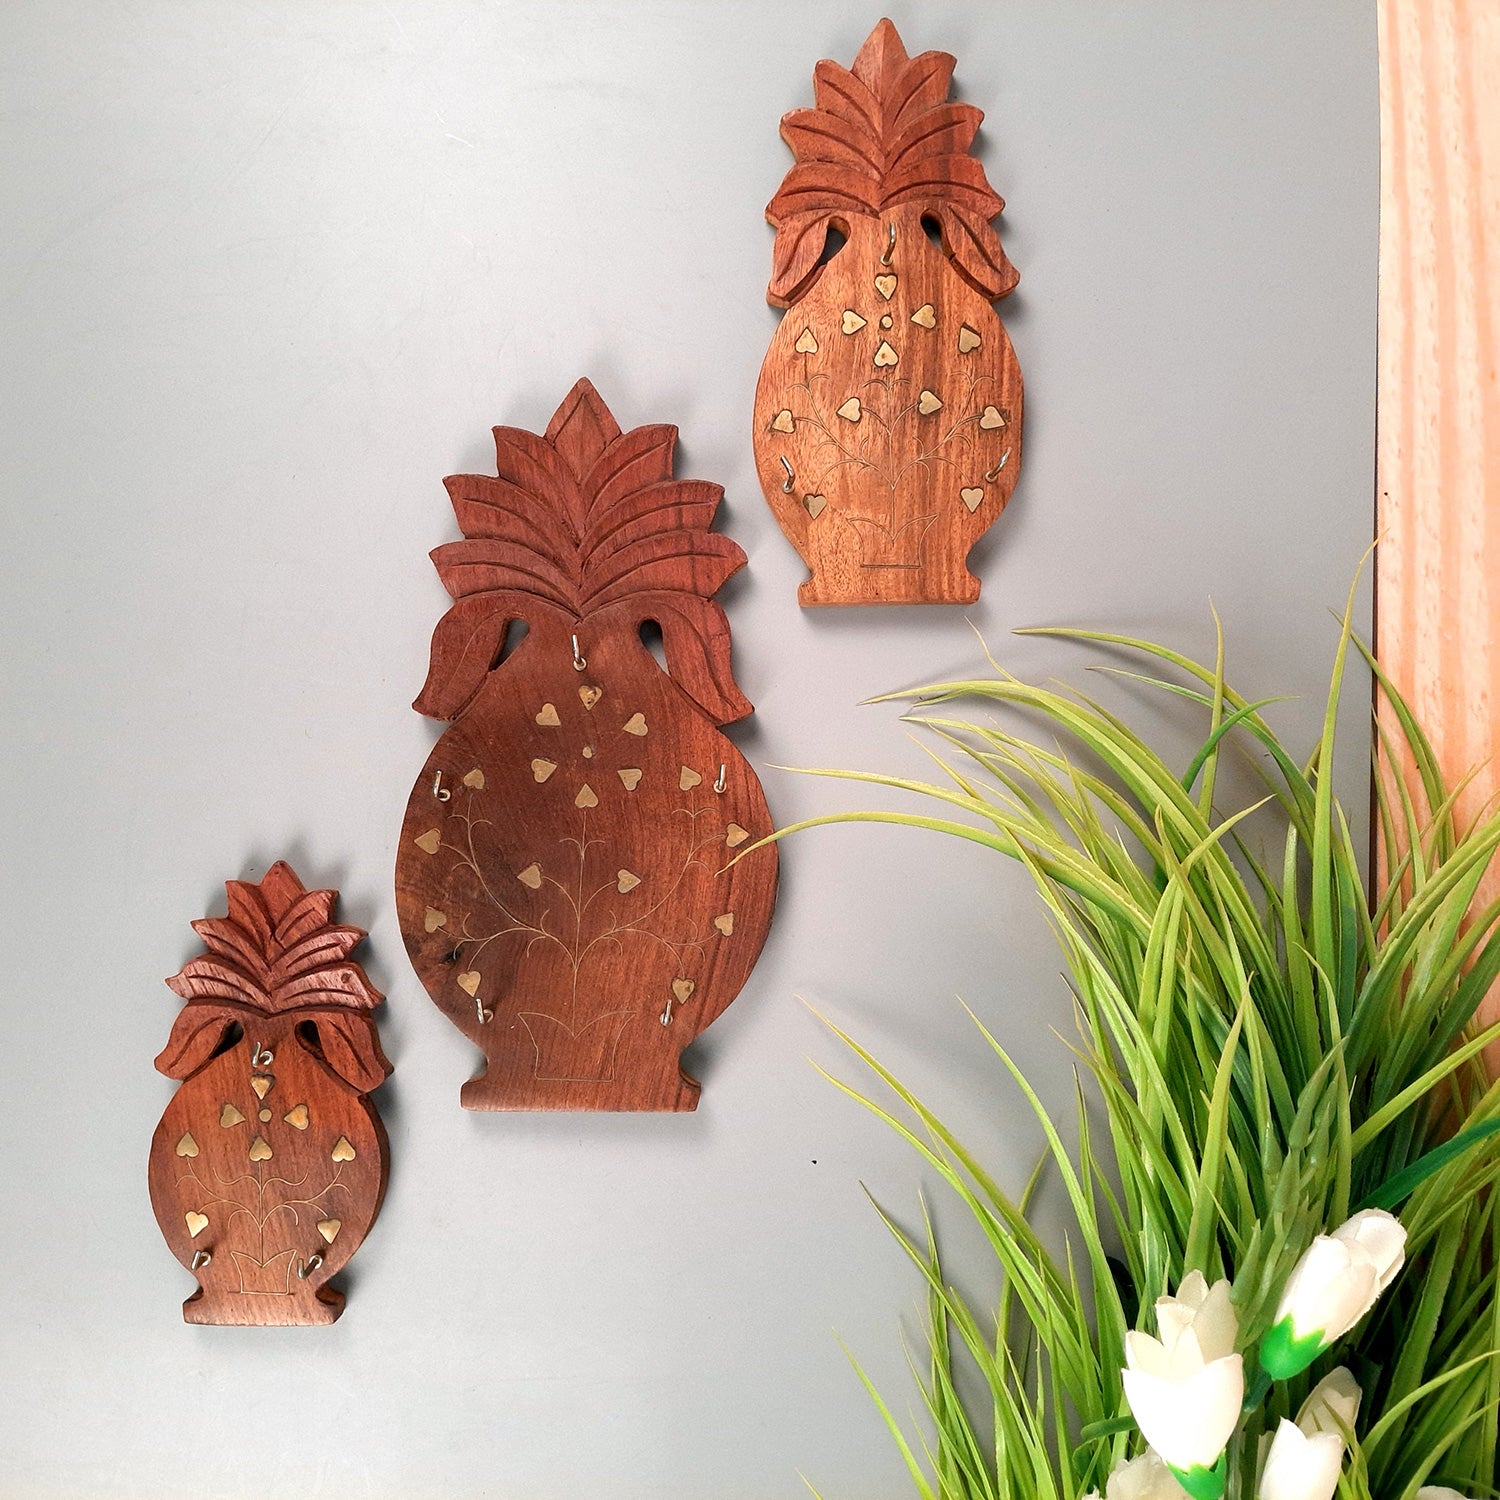 Key Holder Wall Hanging | Key Hook Stand - Pineapple Design | Wooden Keys Organizer - For Home, Entrance, Office Decor & Gifts - (Set of 3) (11 Hooks) - Apkamart